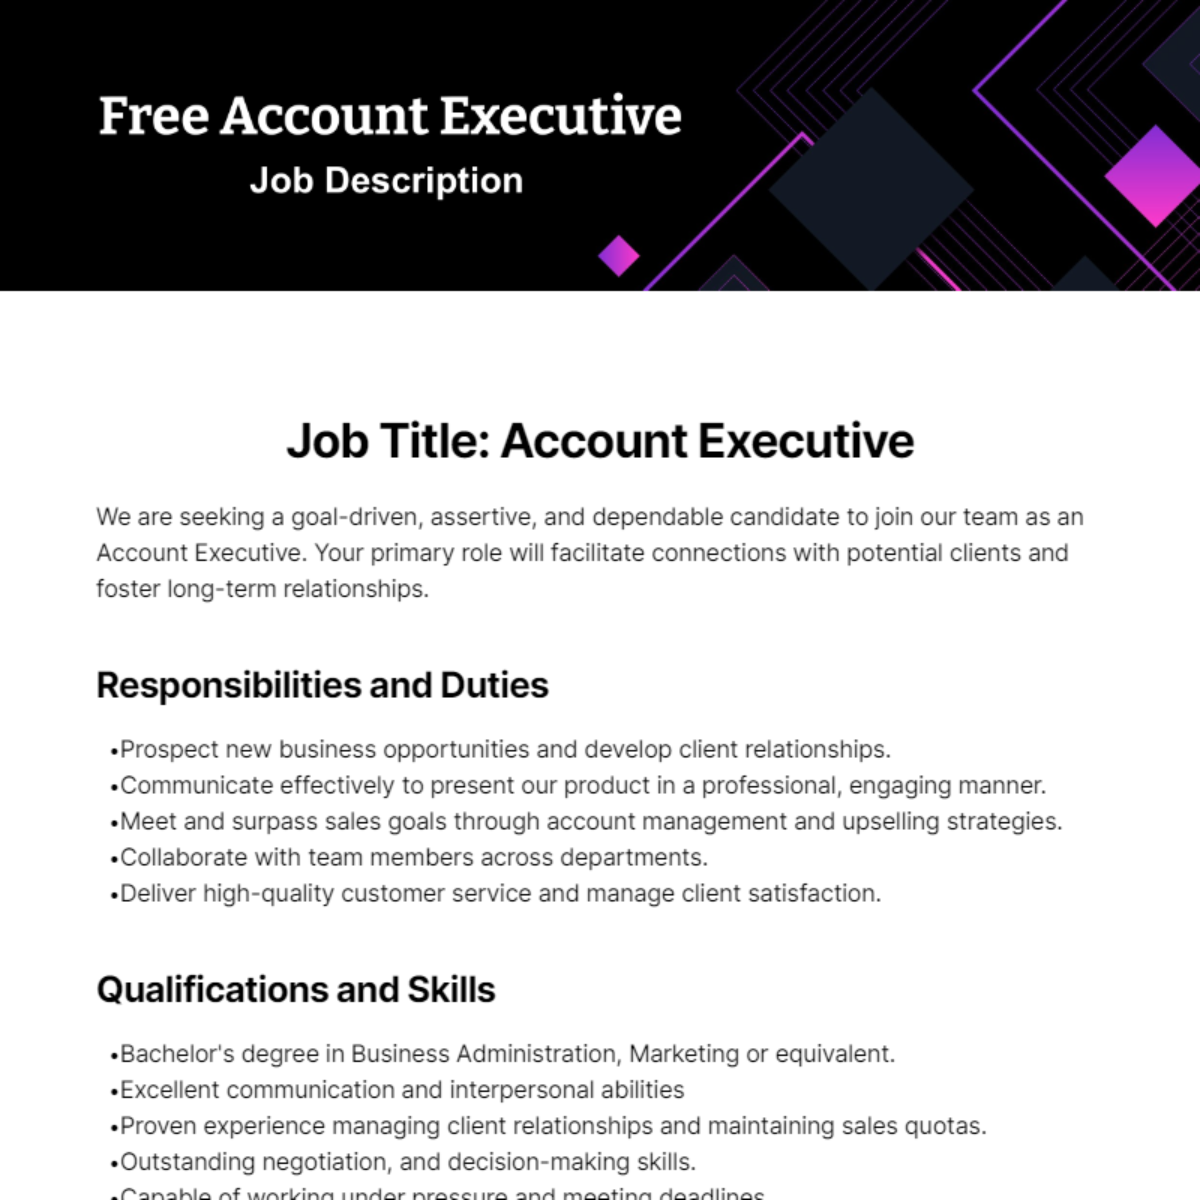 Free Account Executive Job Description Template